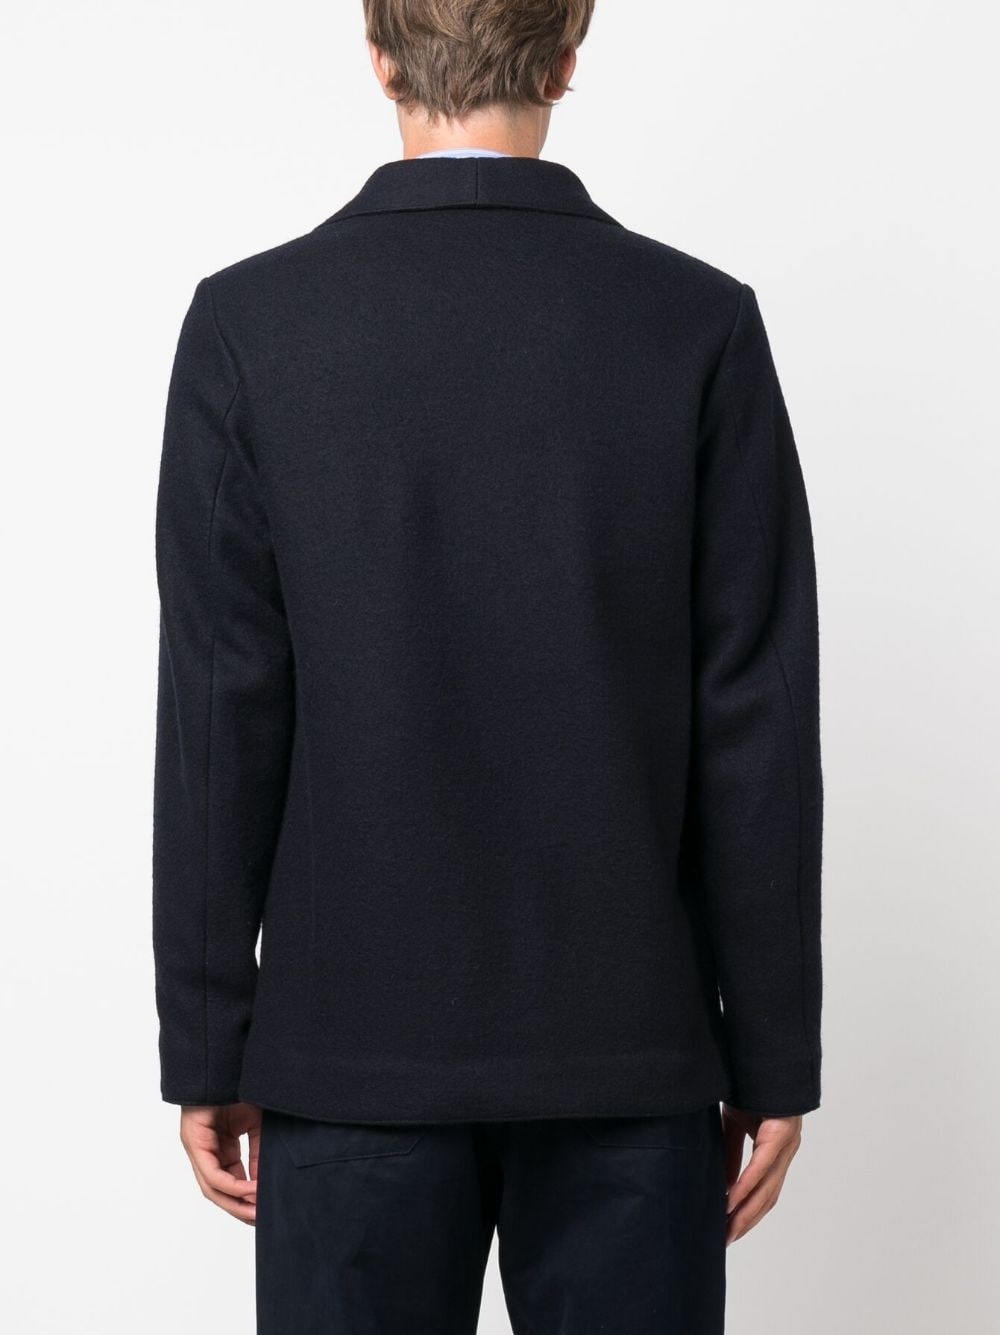 notched-collar wool shirt jacket - 4